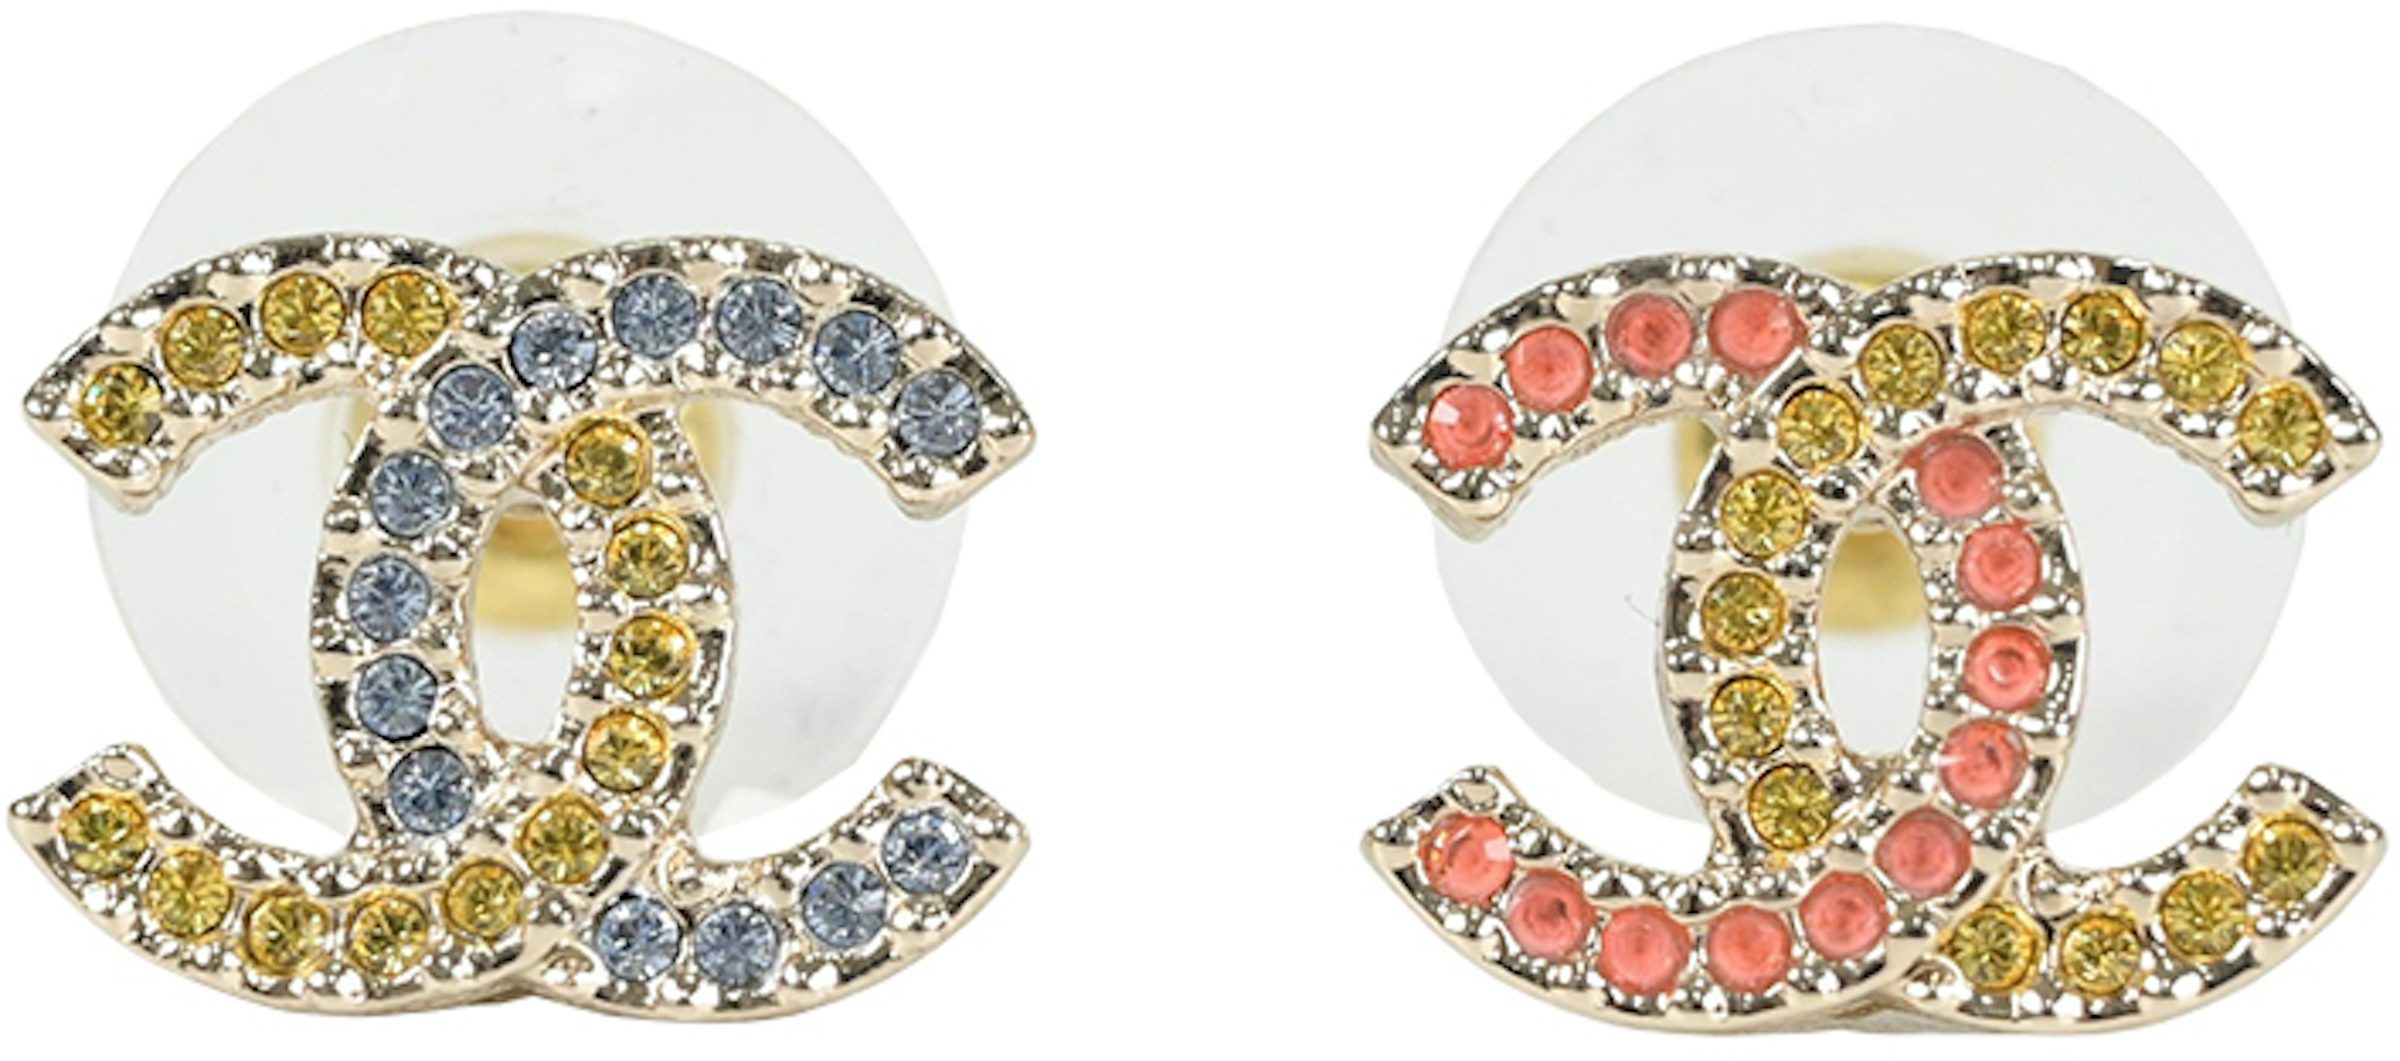 Chanel Colorful Rhinestone CC Earrings Multi